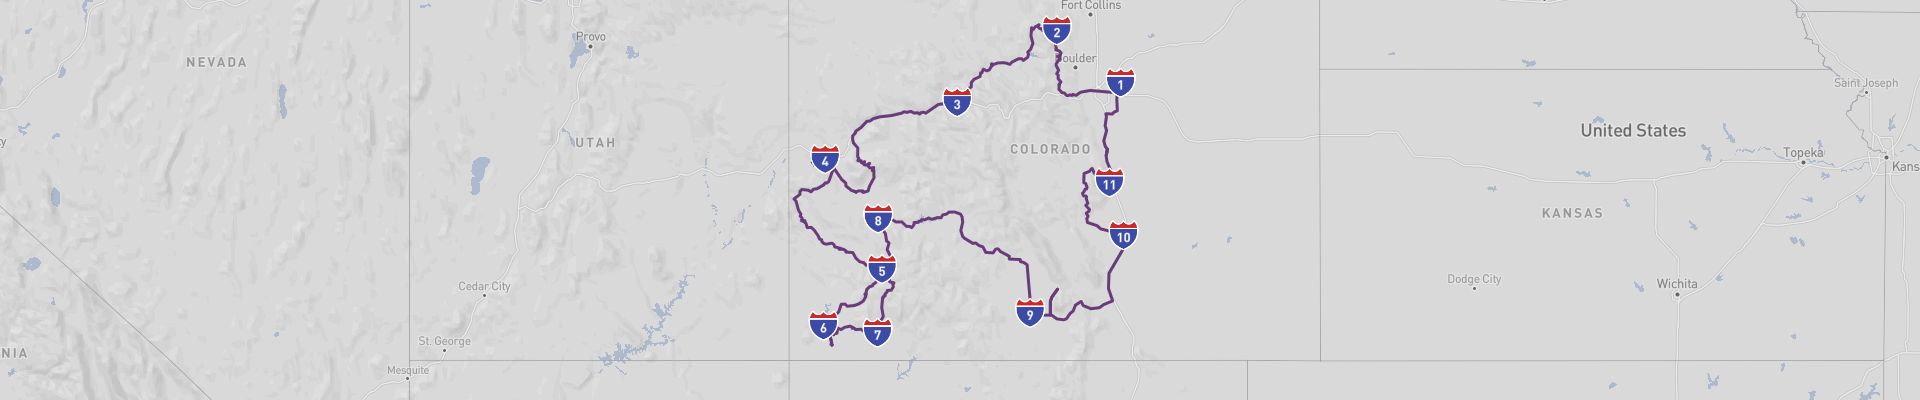 Itinéraire Colorado 